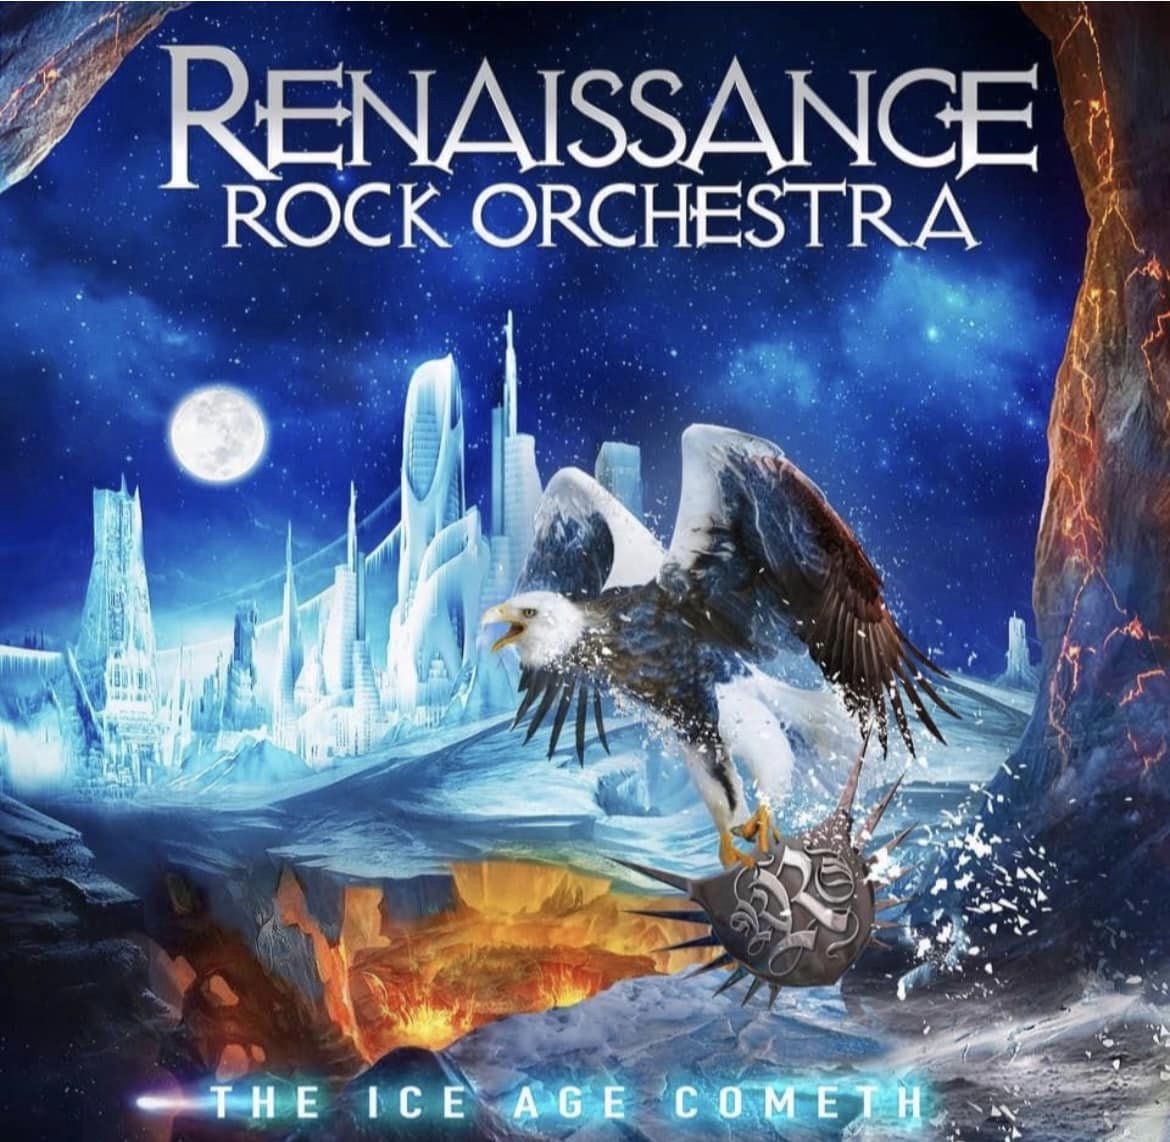 The Ice Age Cometh - RENAISSANCE ROCK ORCHESTRA